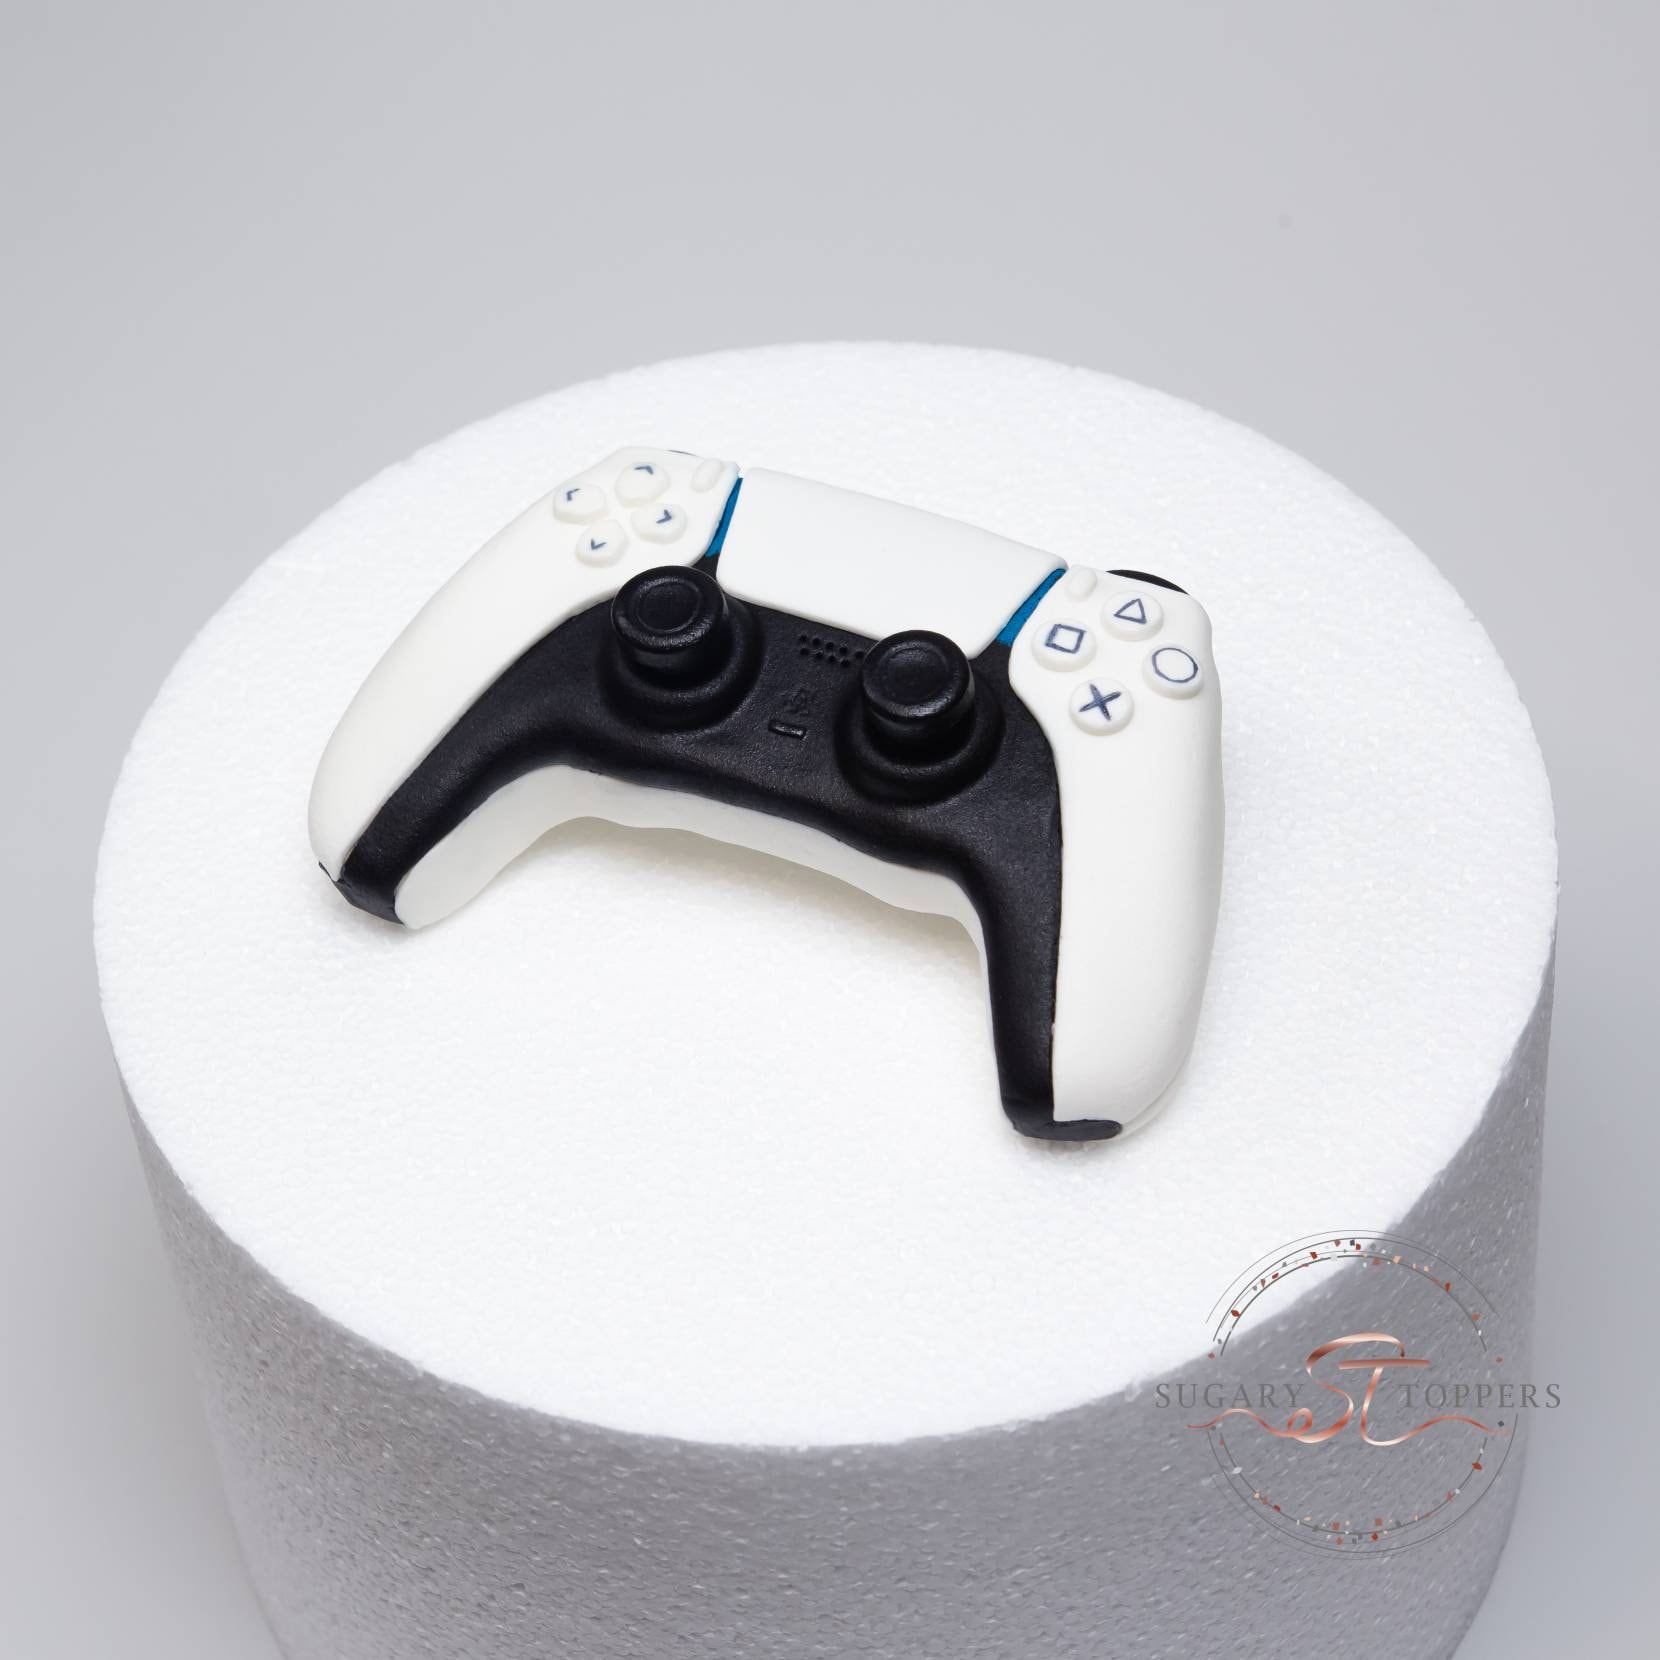 Bolo jogo  Video game cakes, Boy birthday cake, Playstation cake